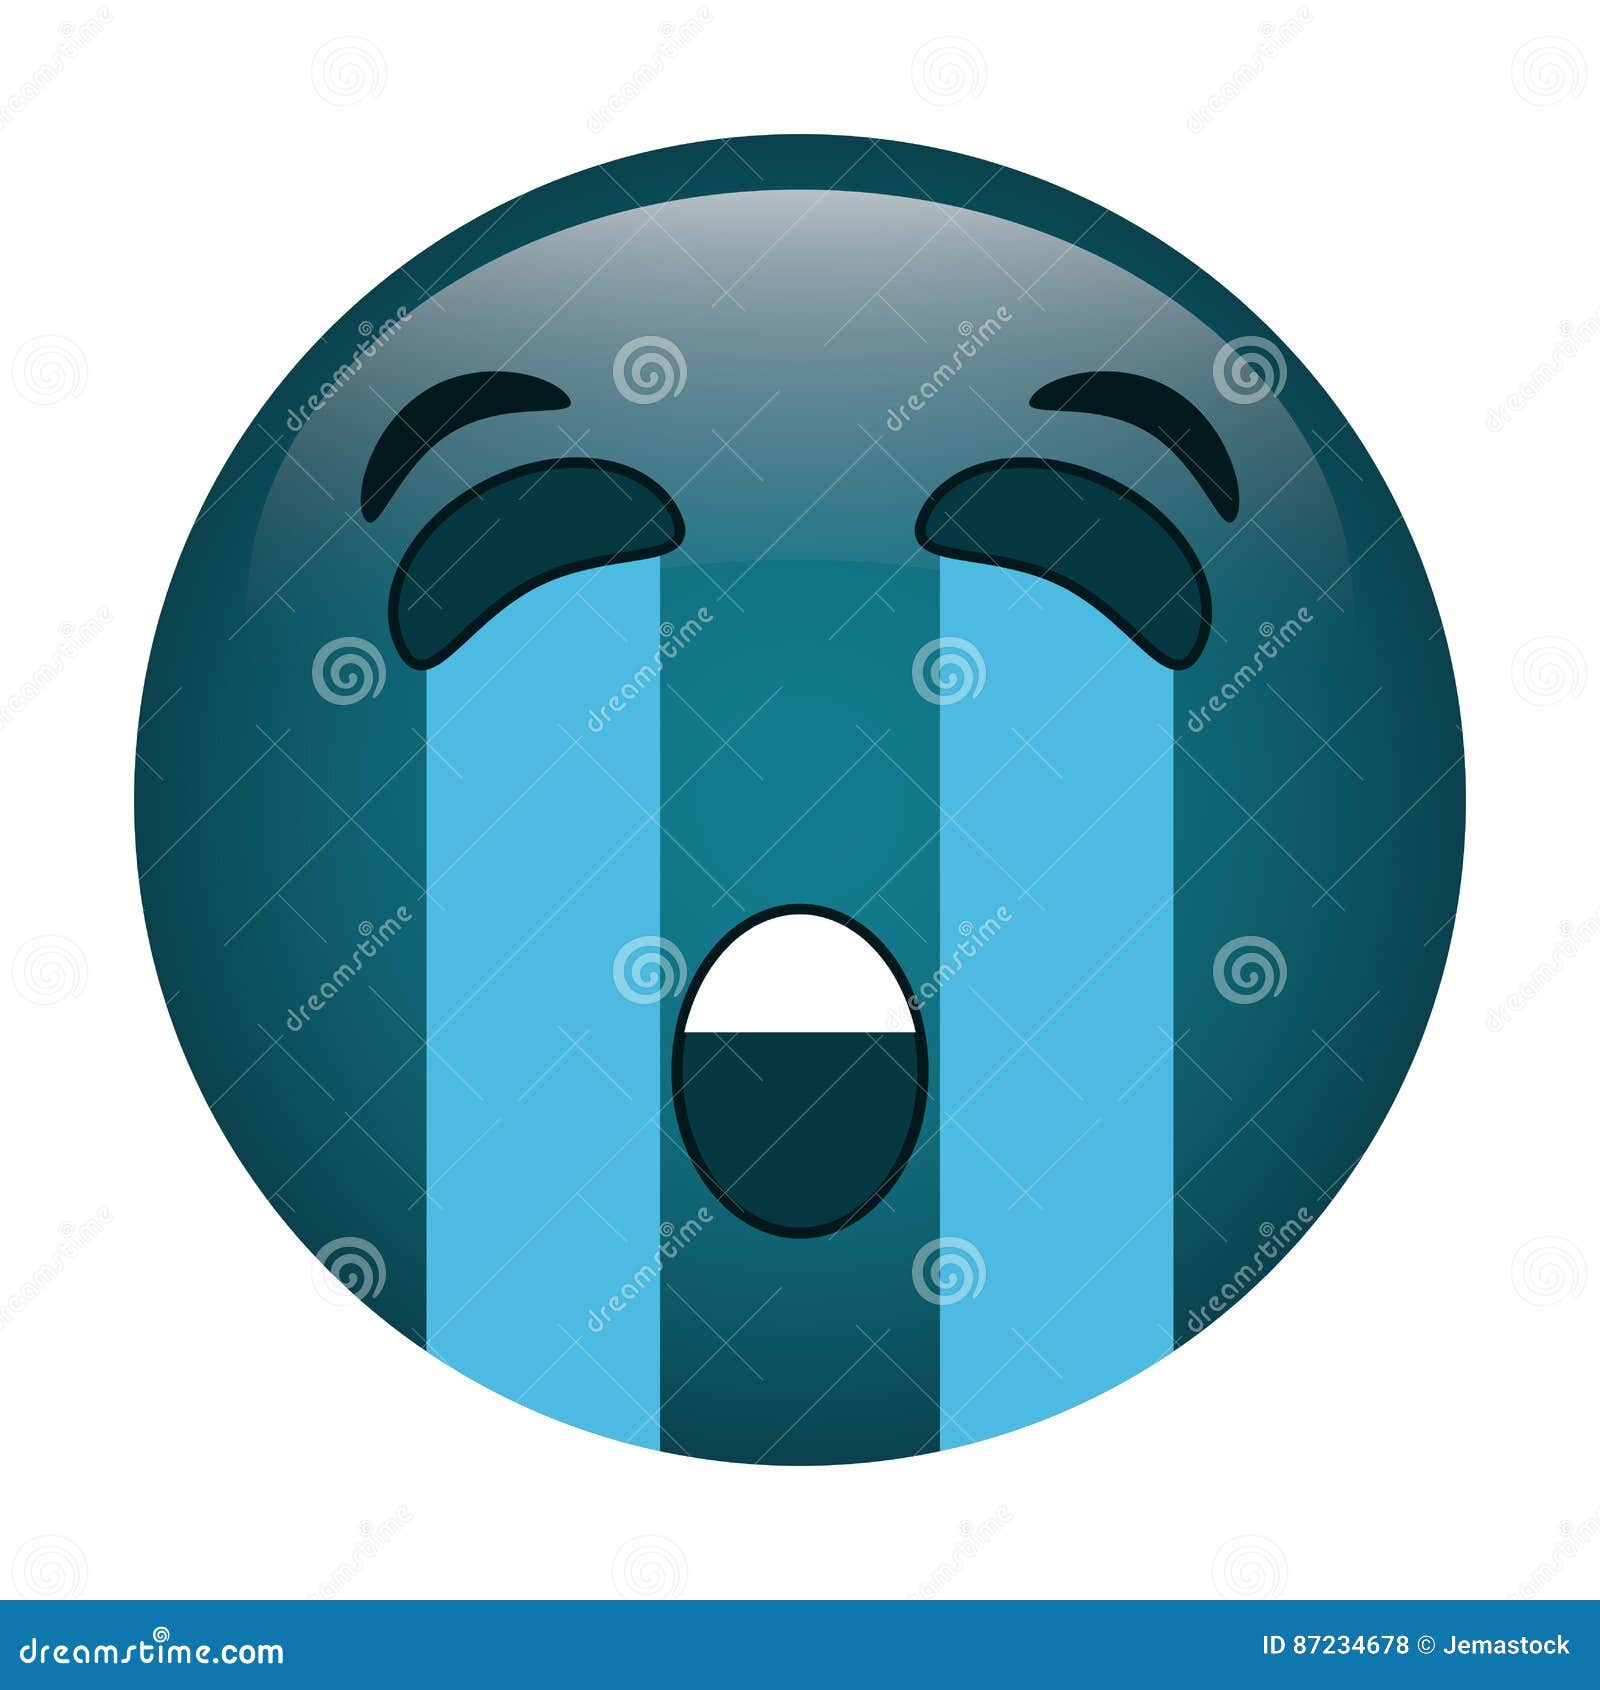 Crying emoticon style icon stock vector. Illustration of emoticon ...